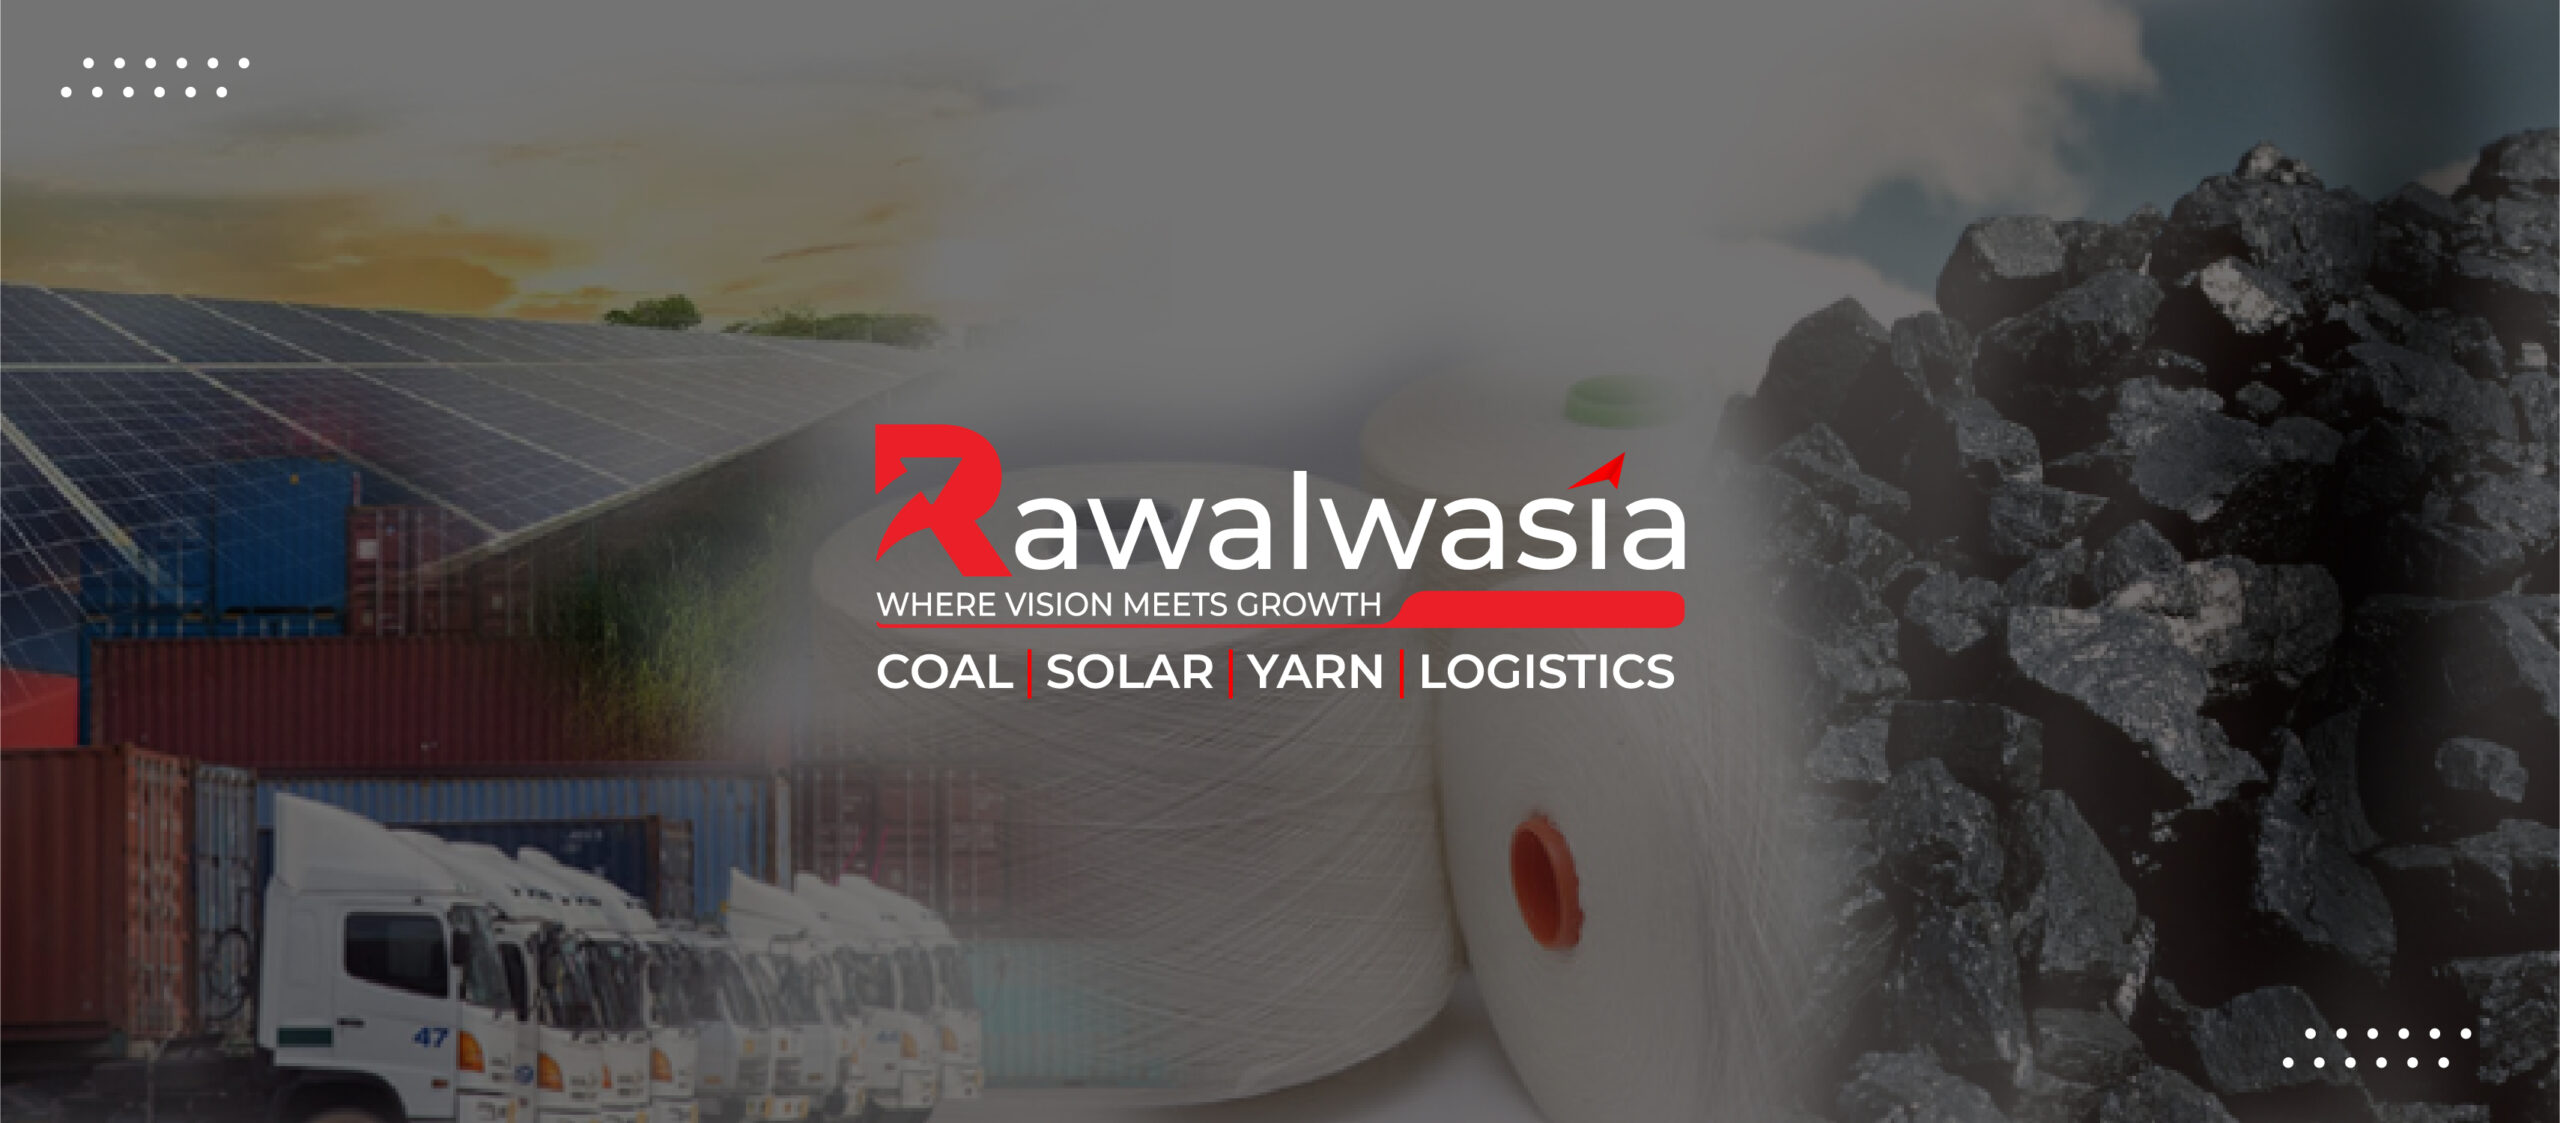 Rawalwasia Group.